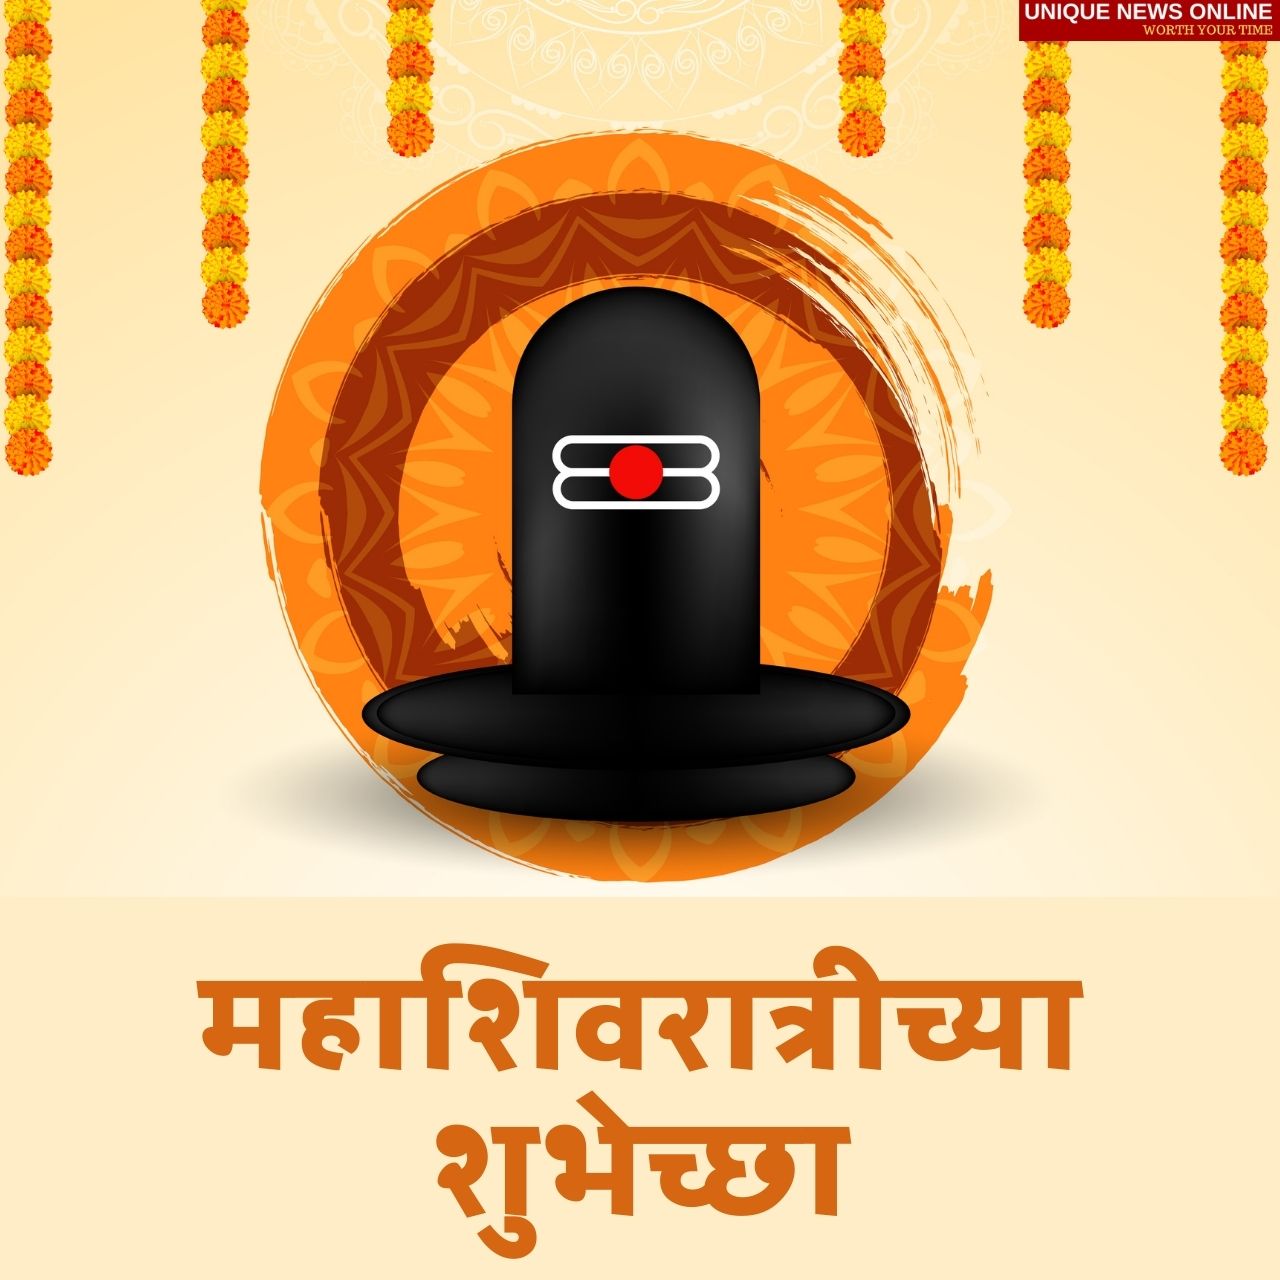 Maha Shivratri 2022 Marathi Quotes, Greetings, Wishes, HD Images, Shayari to Share